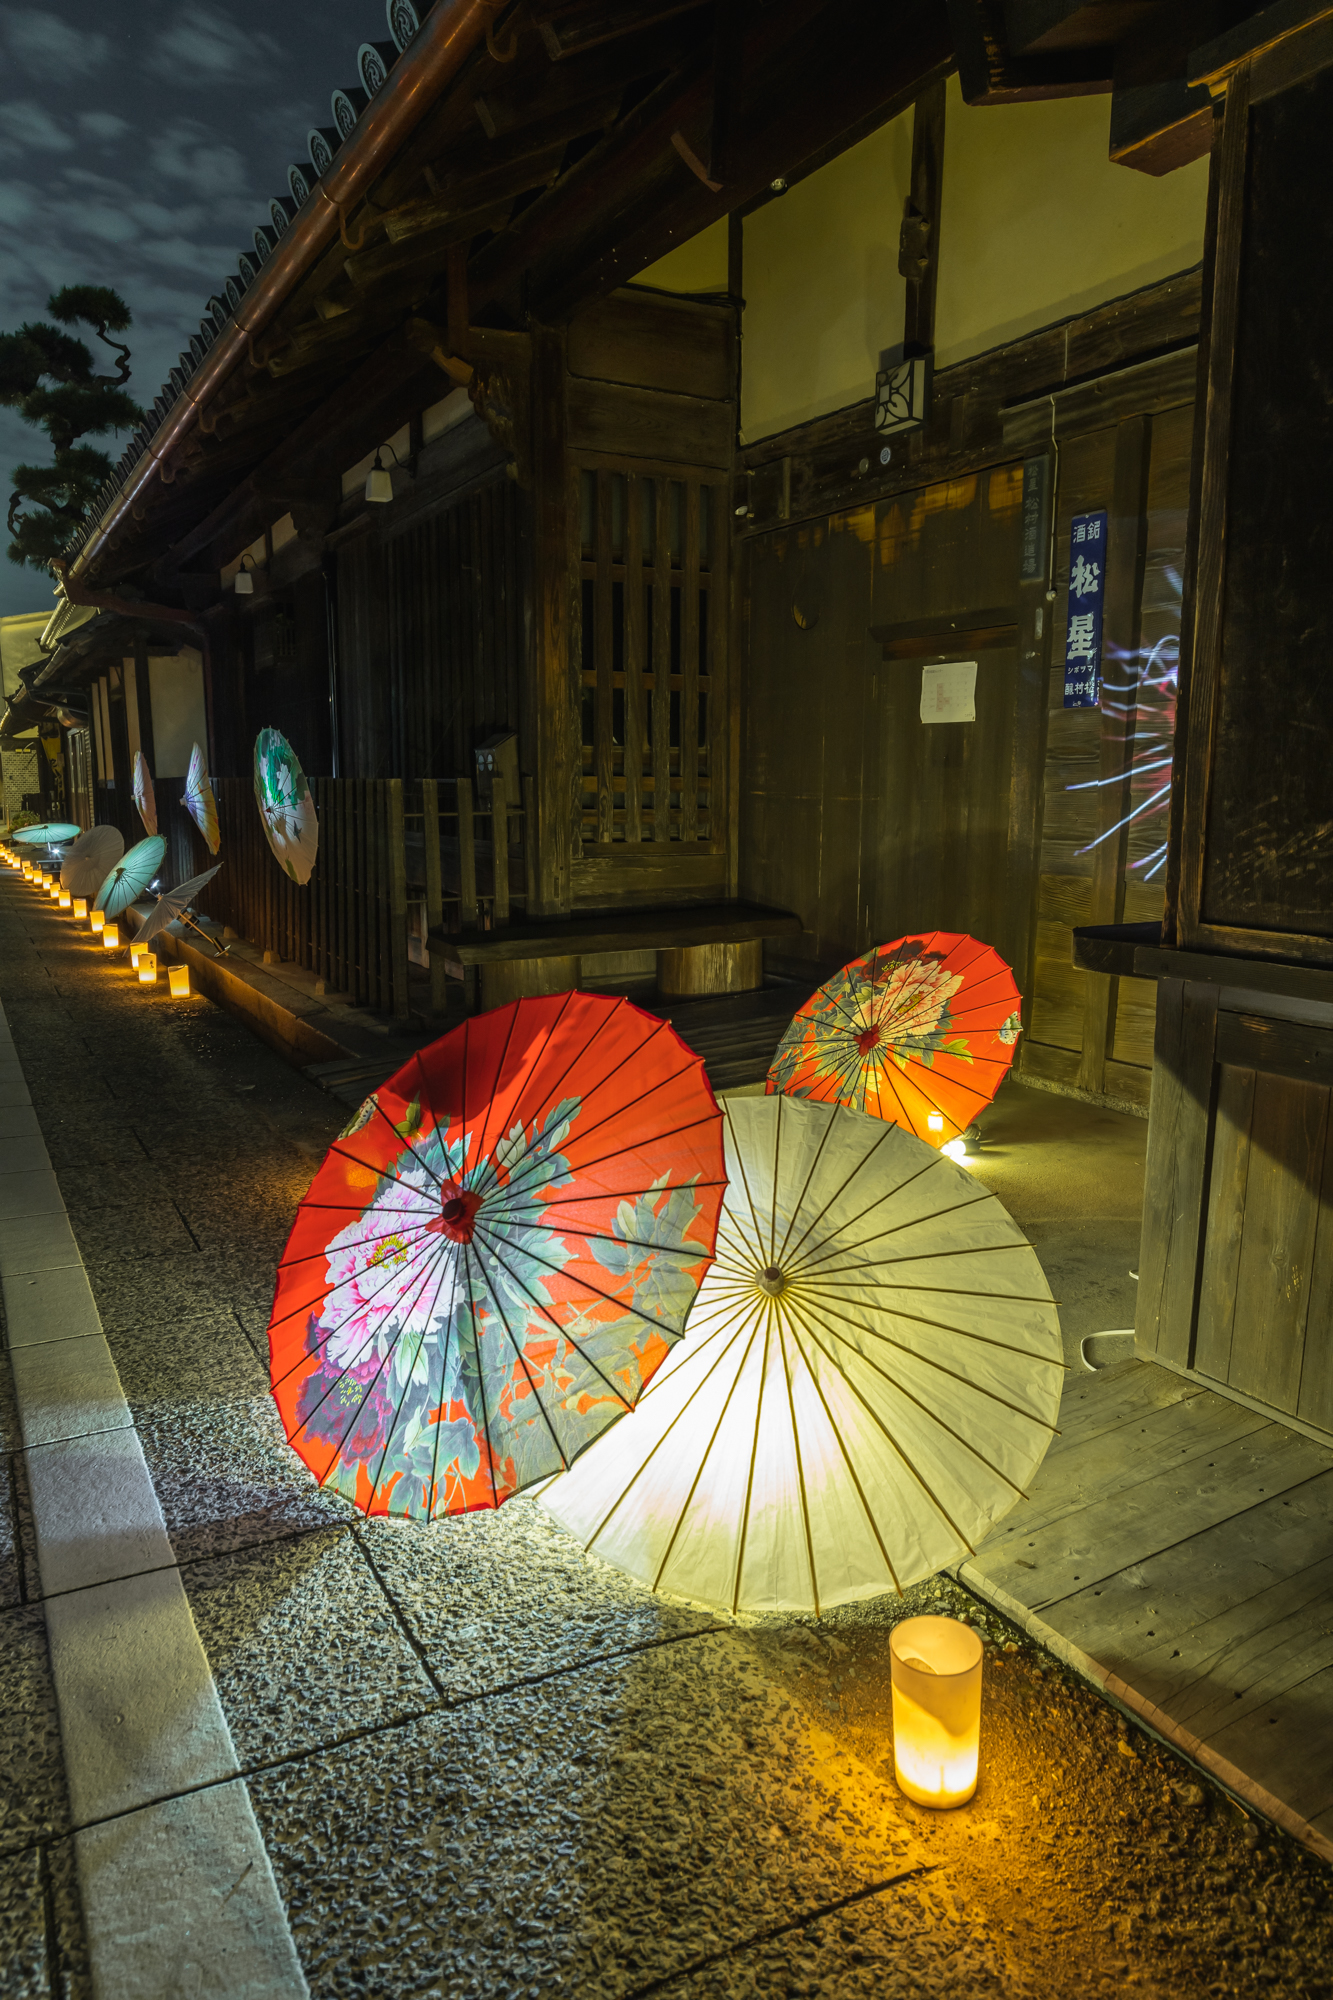 NIKON-CORPORATION_NIKON-D850_2883626482-2883729040_21303 奈良県　明日香村 飛鳥光の回廊( 奈良県の秋におすすめの幻想的なライトアップ・夜景が観れる写真スポット!撮影した写真の紹介、アクセス情報や撮影ポイントなど!)　